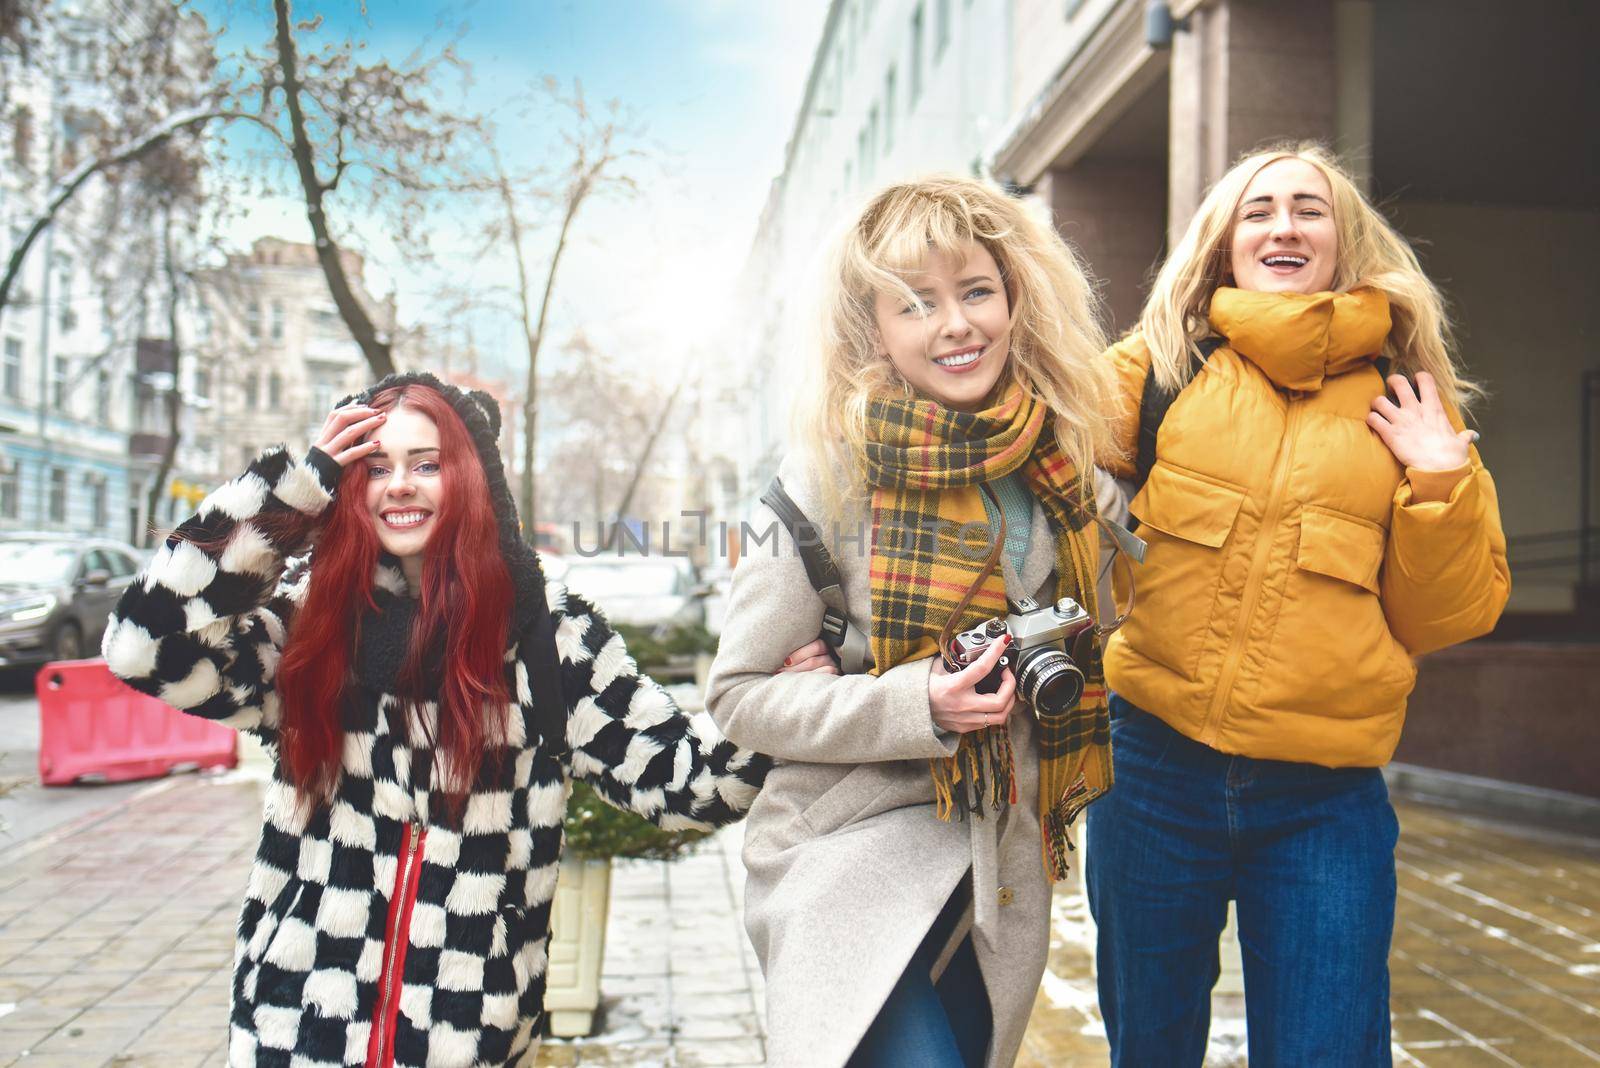 tourism concept - three beautiful girls tourists, having fun Running through the bright city by Nickstock